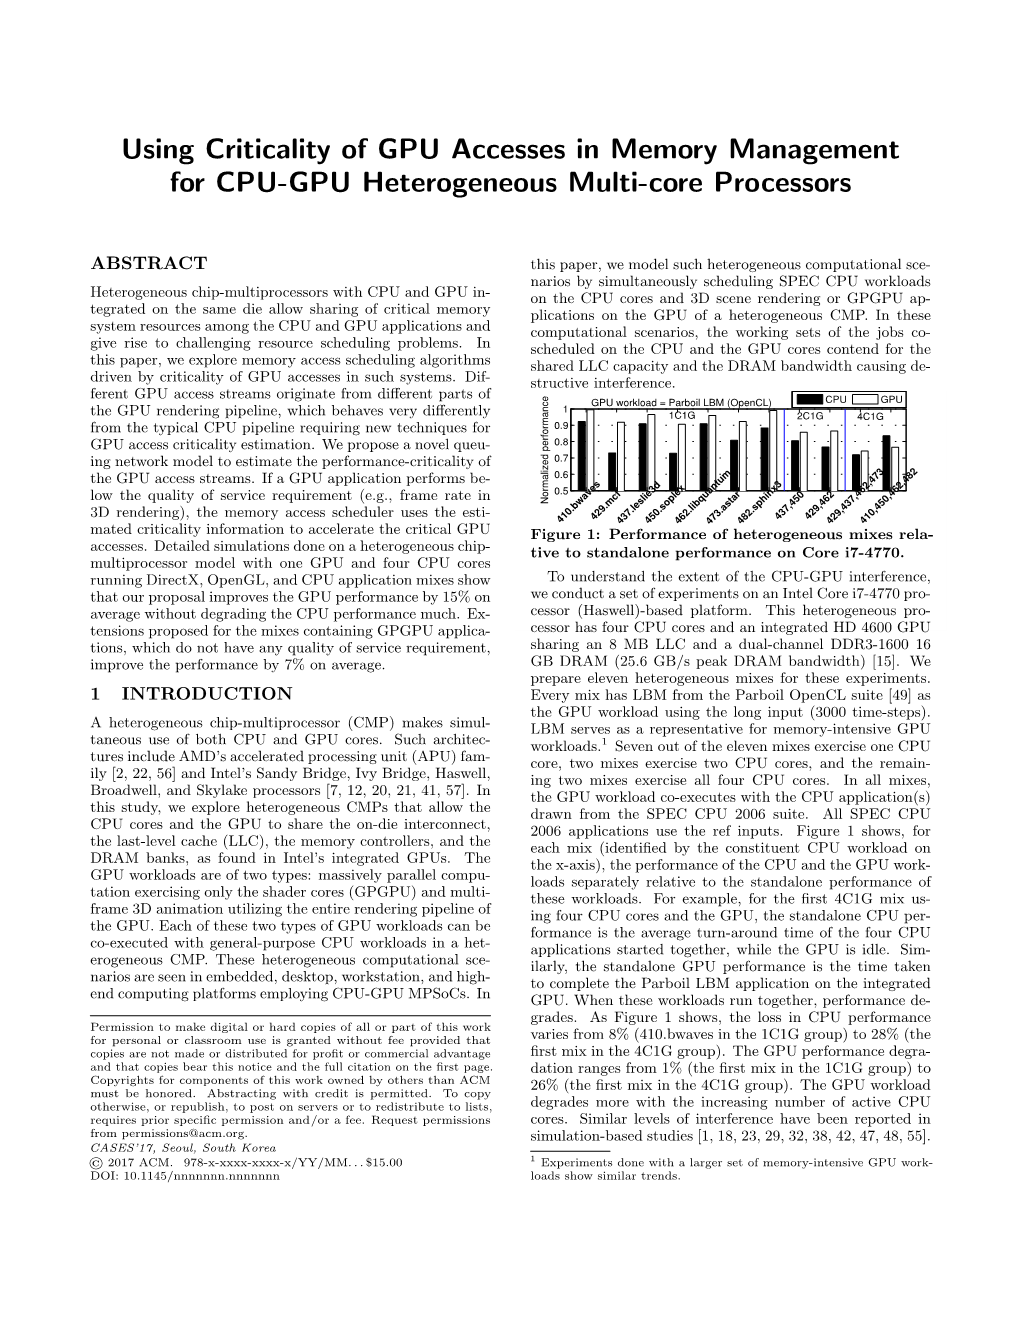 Using Criticality of GPU Accesses in Memory Management for CPU-GPU Heterogeneous Multi-Core Processors